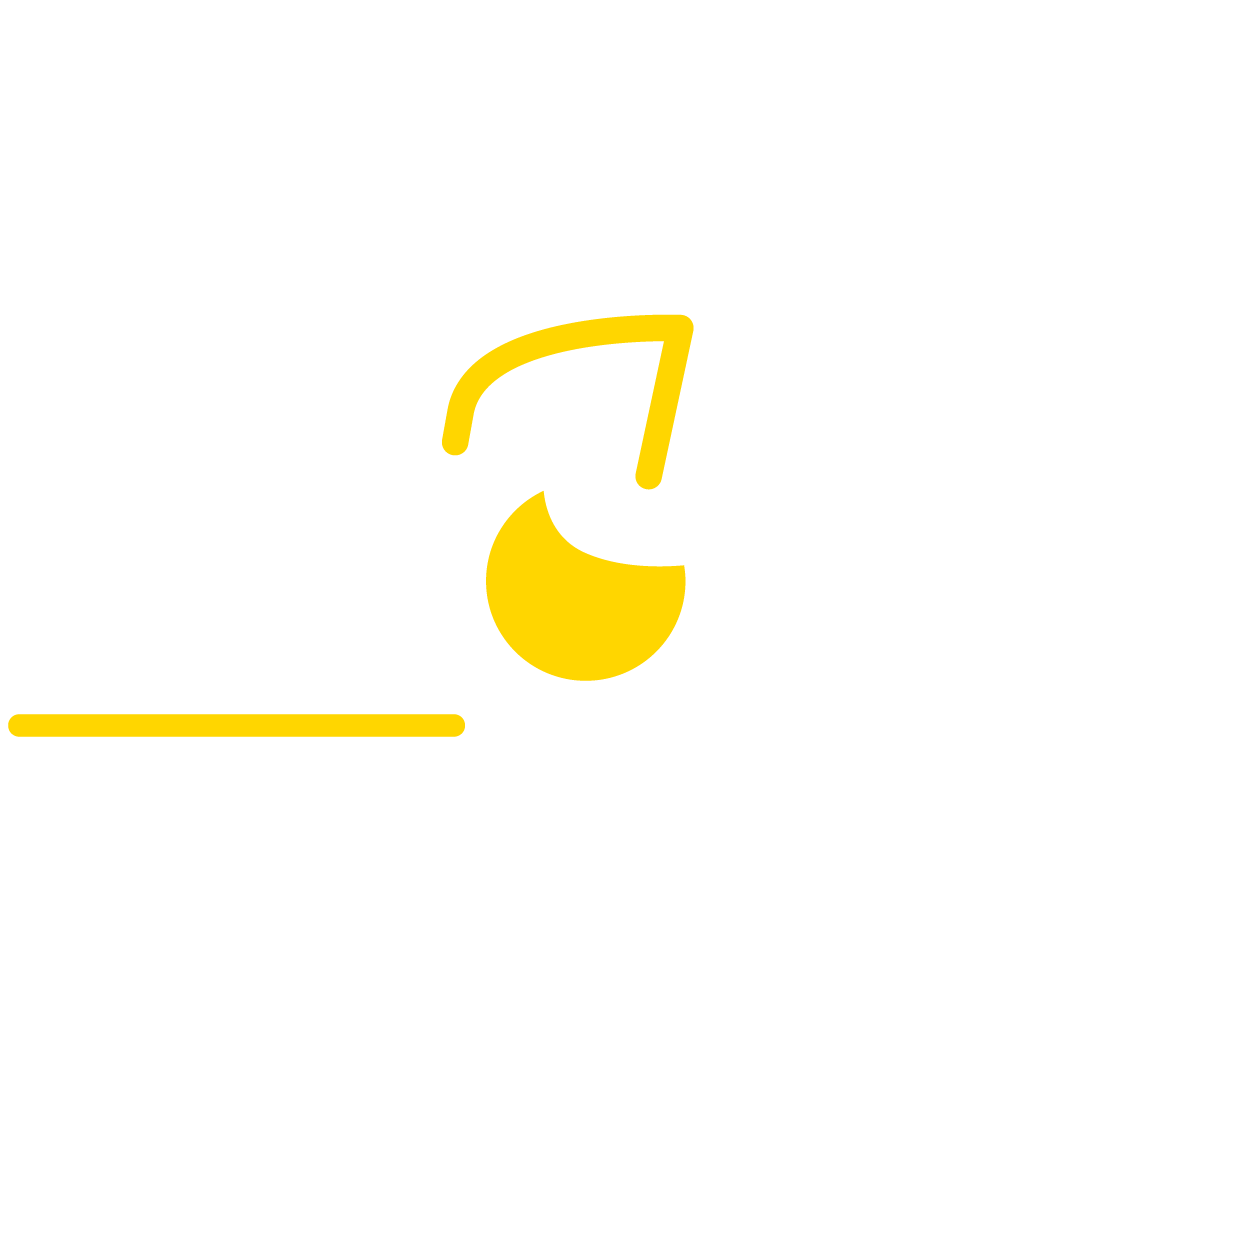 A1 Wheelchair Services